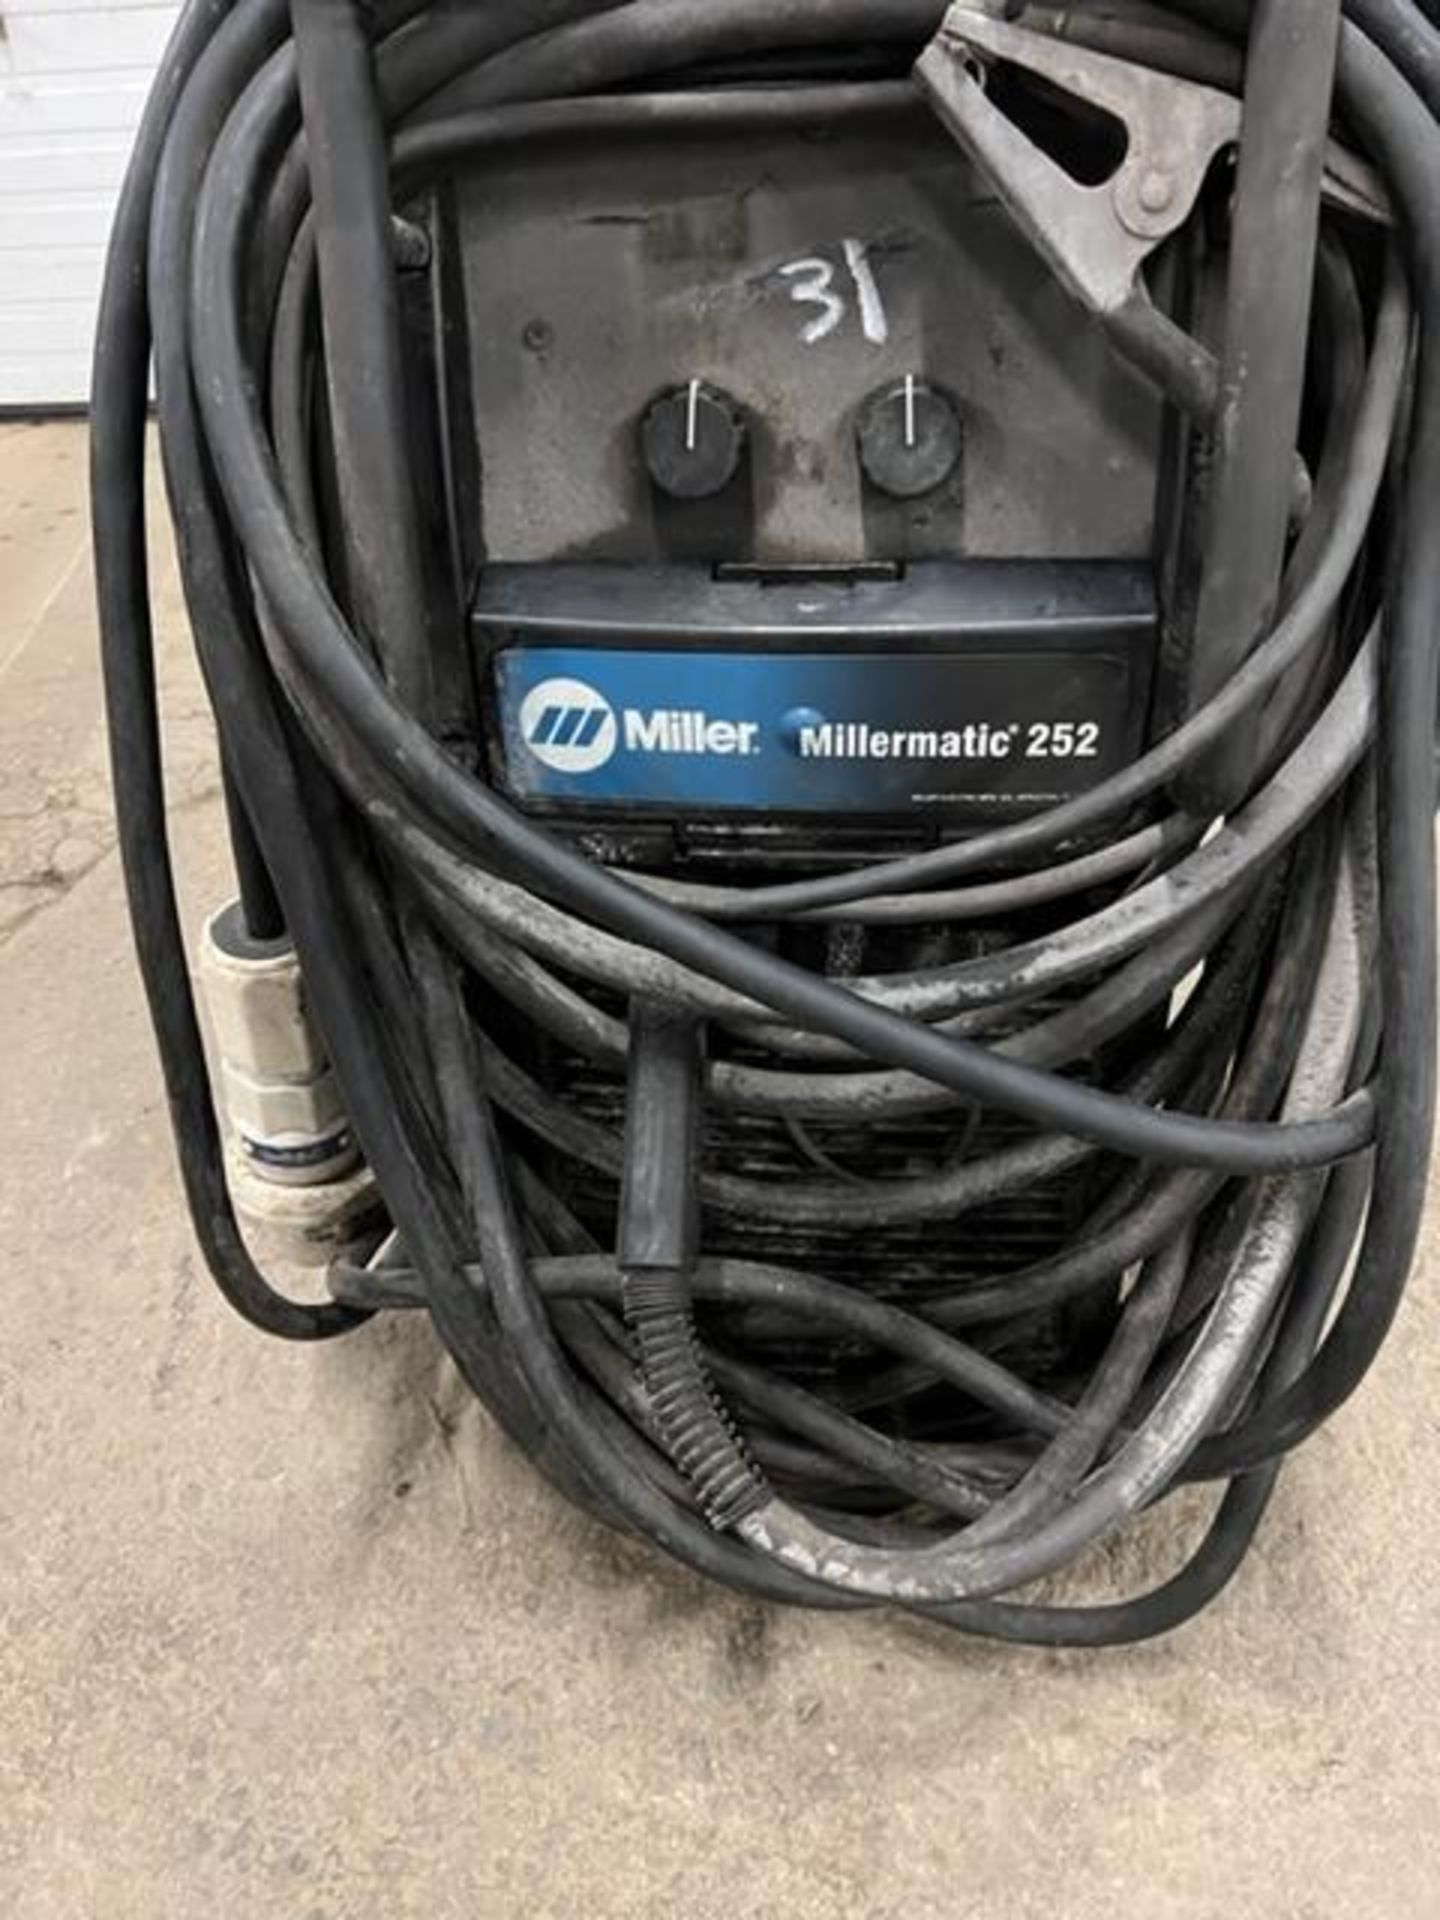 Miller Millermatic 252 Mig Welder 250 Amp w built in wire feeder and mig gun COMPLETE 230/460/575V - Image 2 of 2